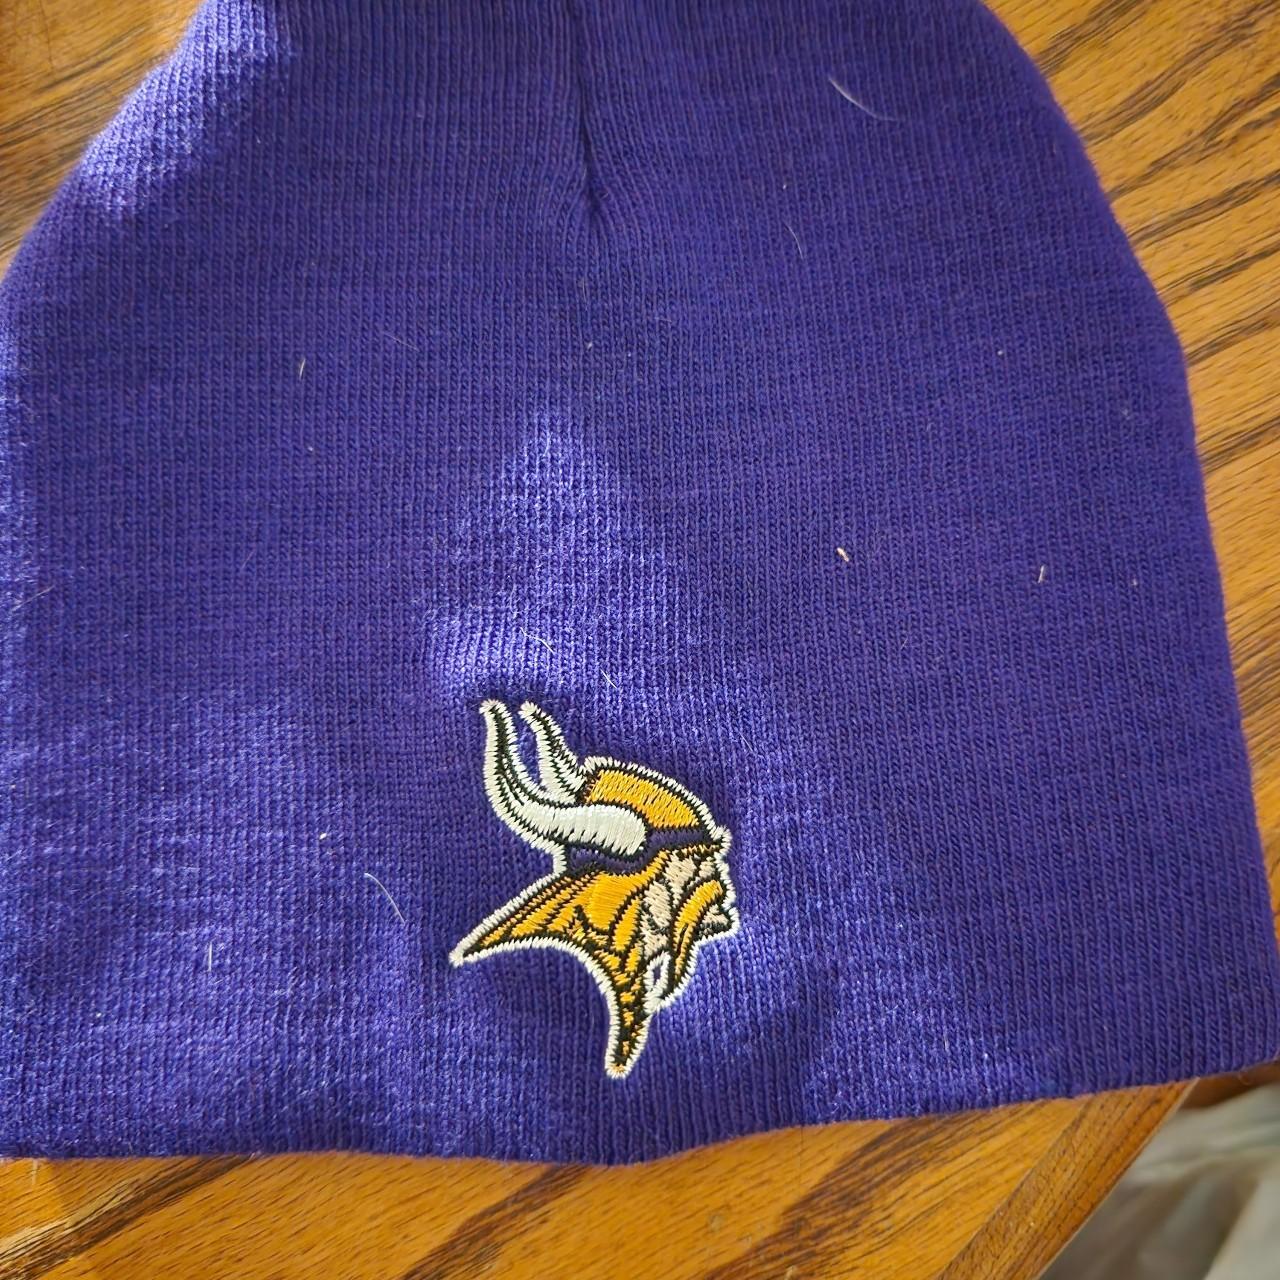 Minnesota vikings winter hat in good shape just... - Depop